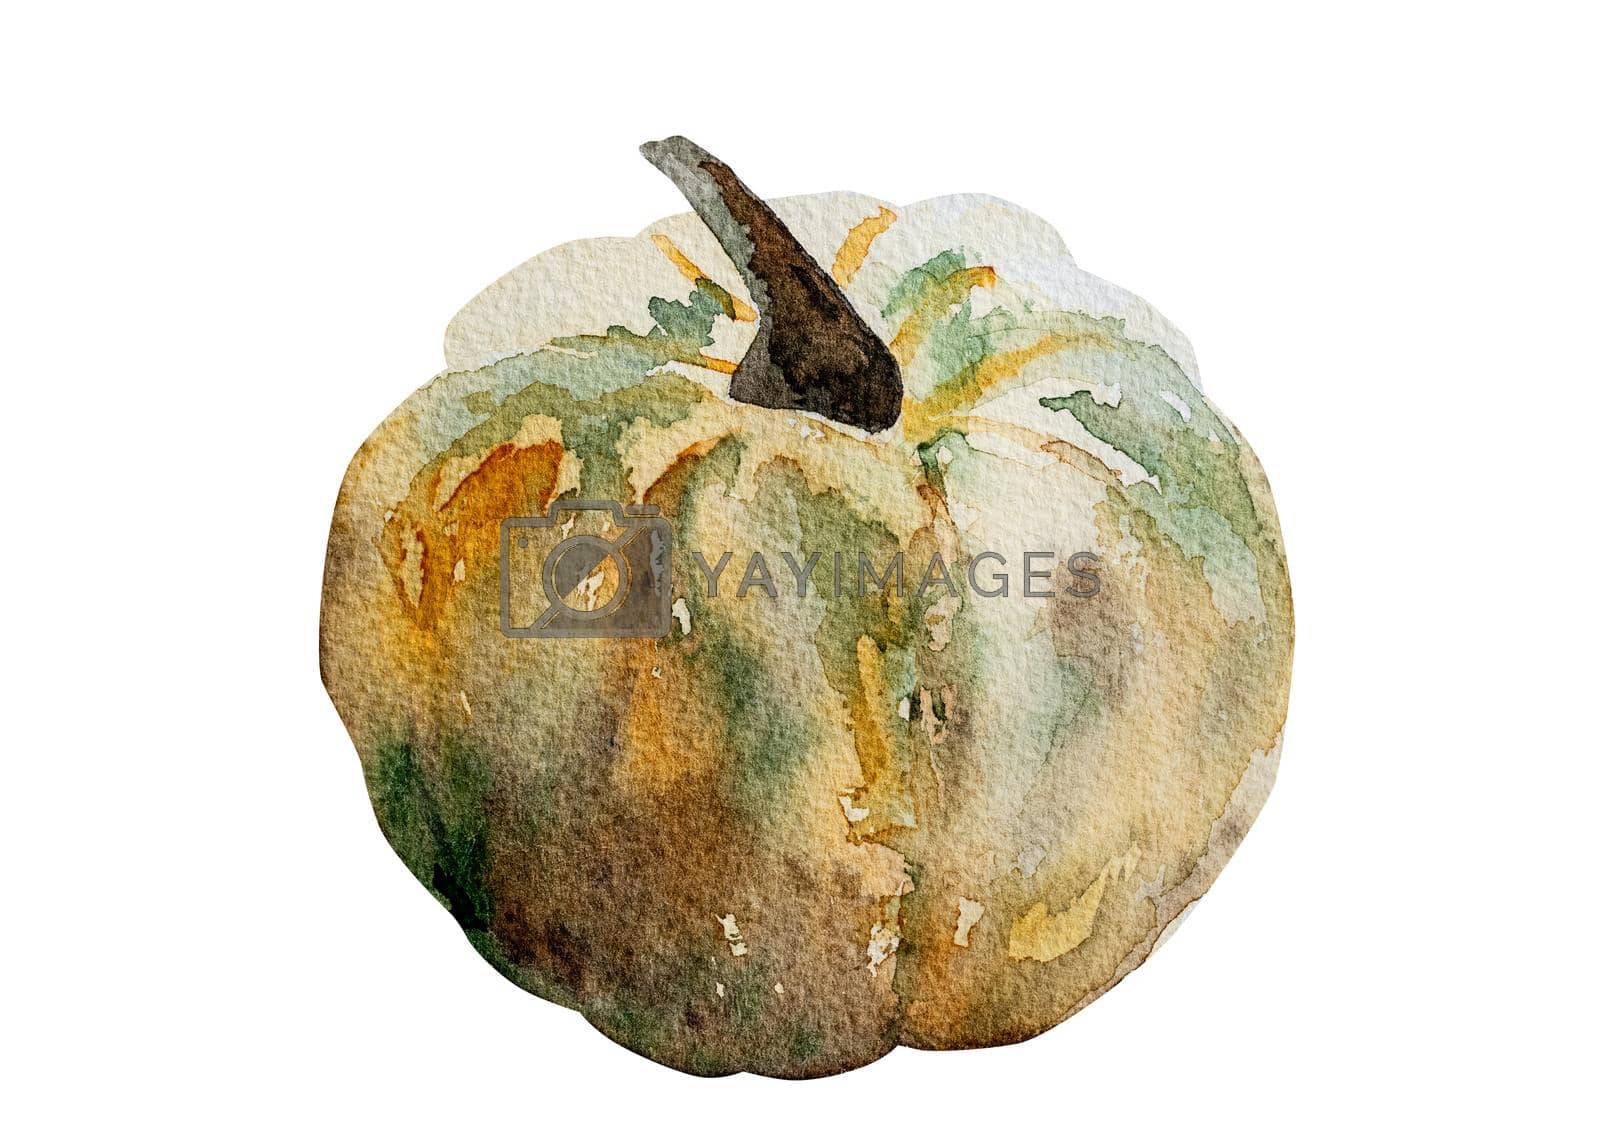 Royalty free image of Halloween watercolor pumpkin by tan4ikk1